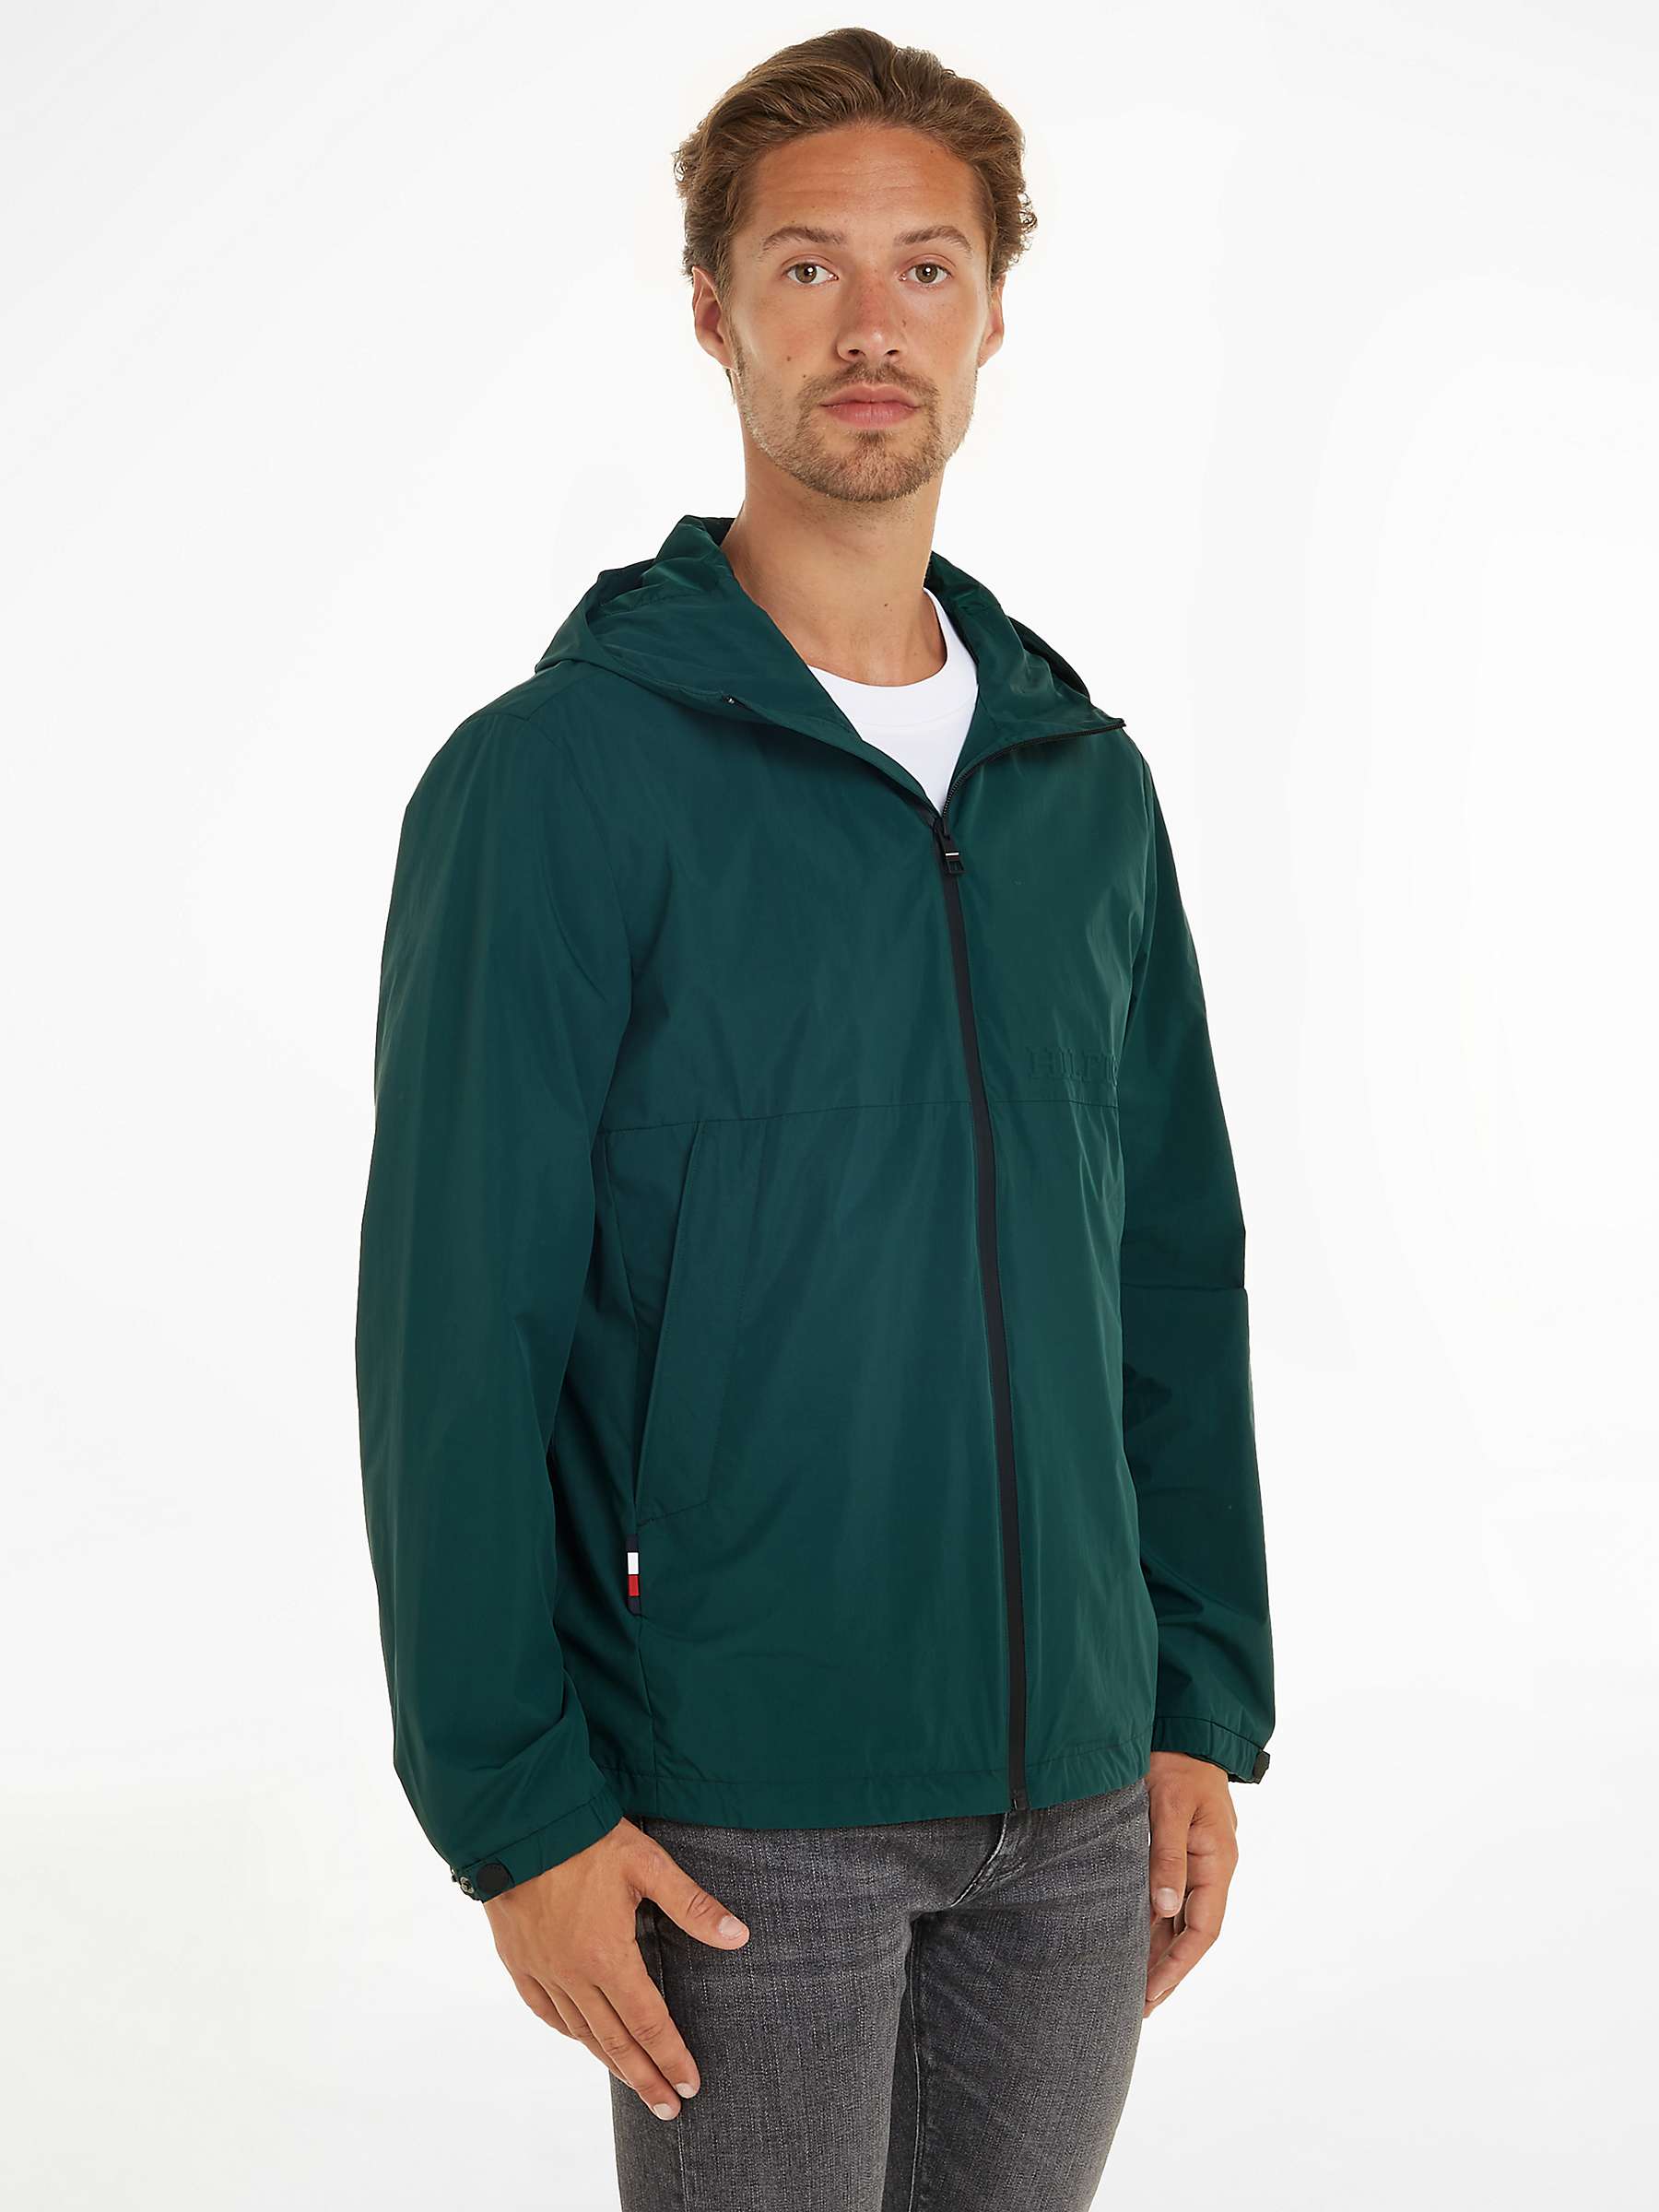 Buy Tommy Hilfiger Hooded Windbreaker Jacket Online at johnlewis.com